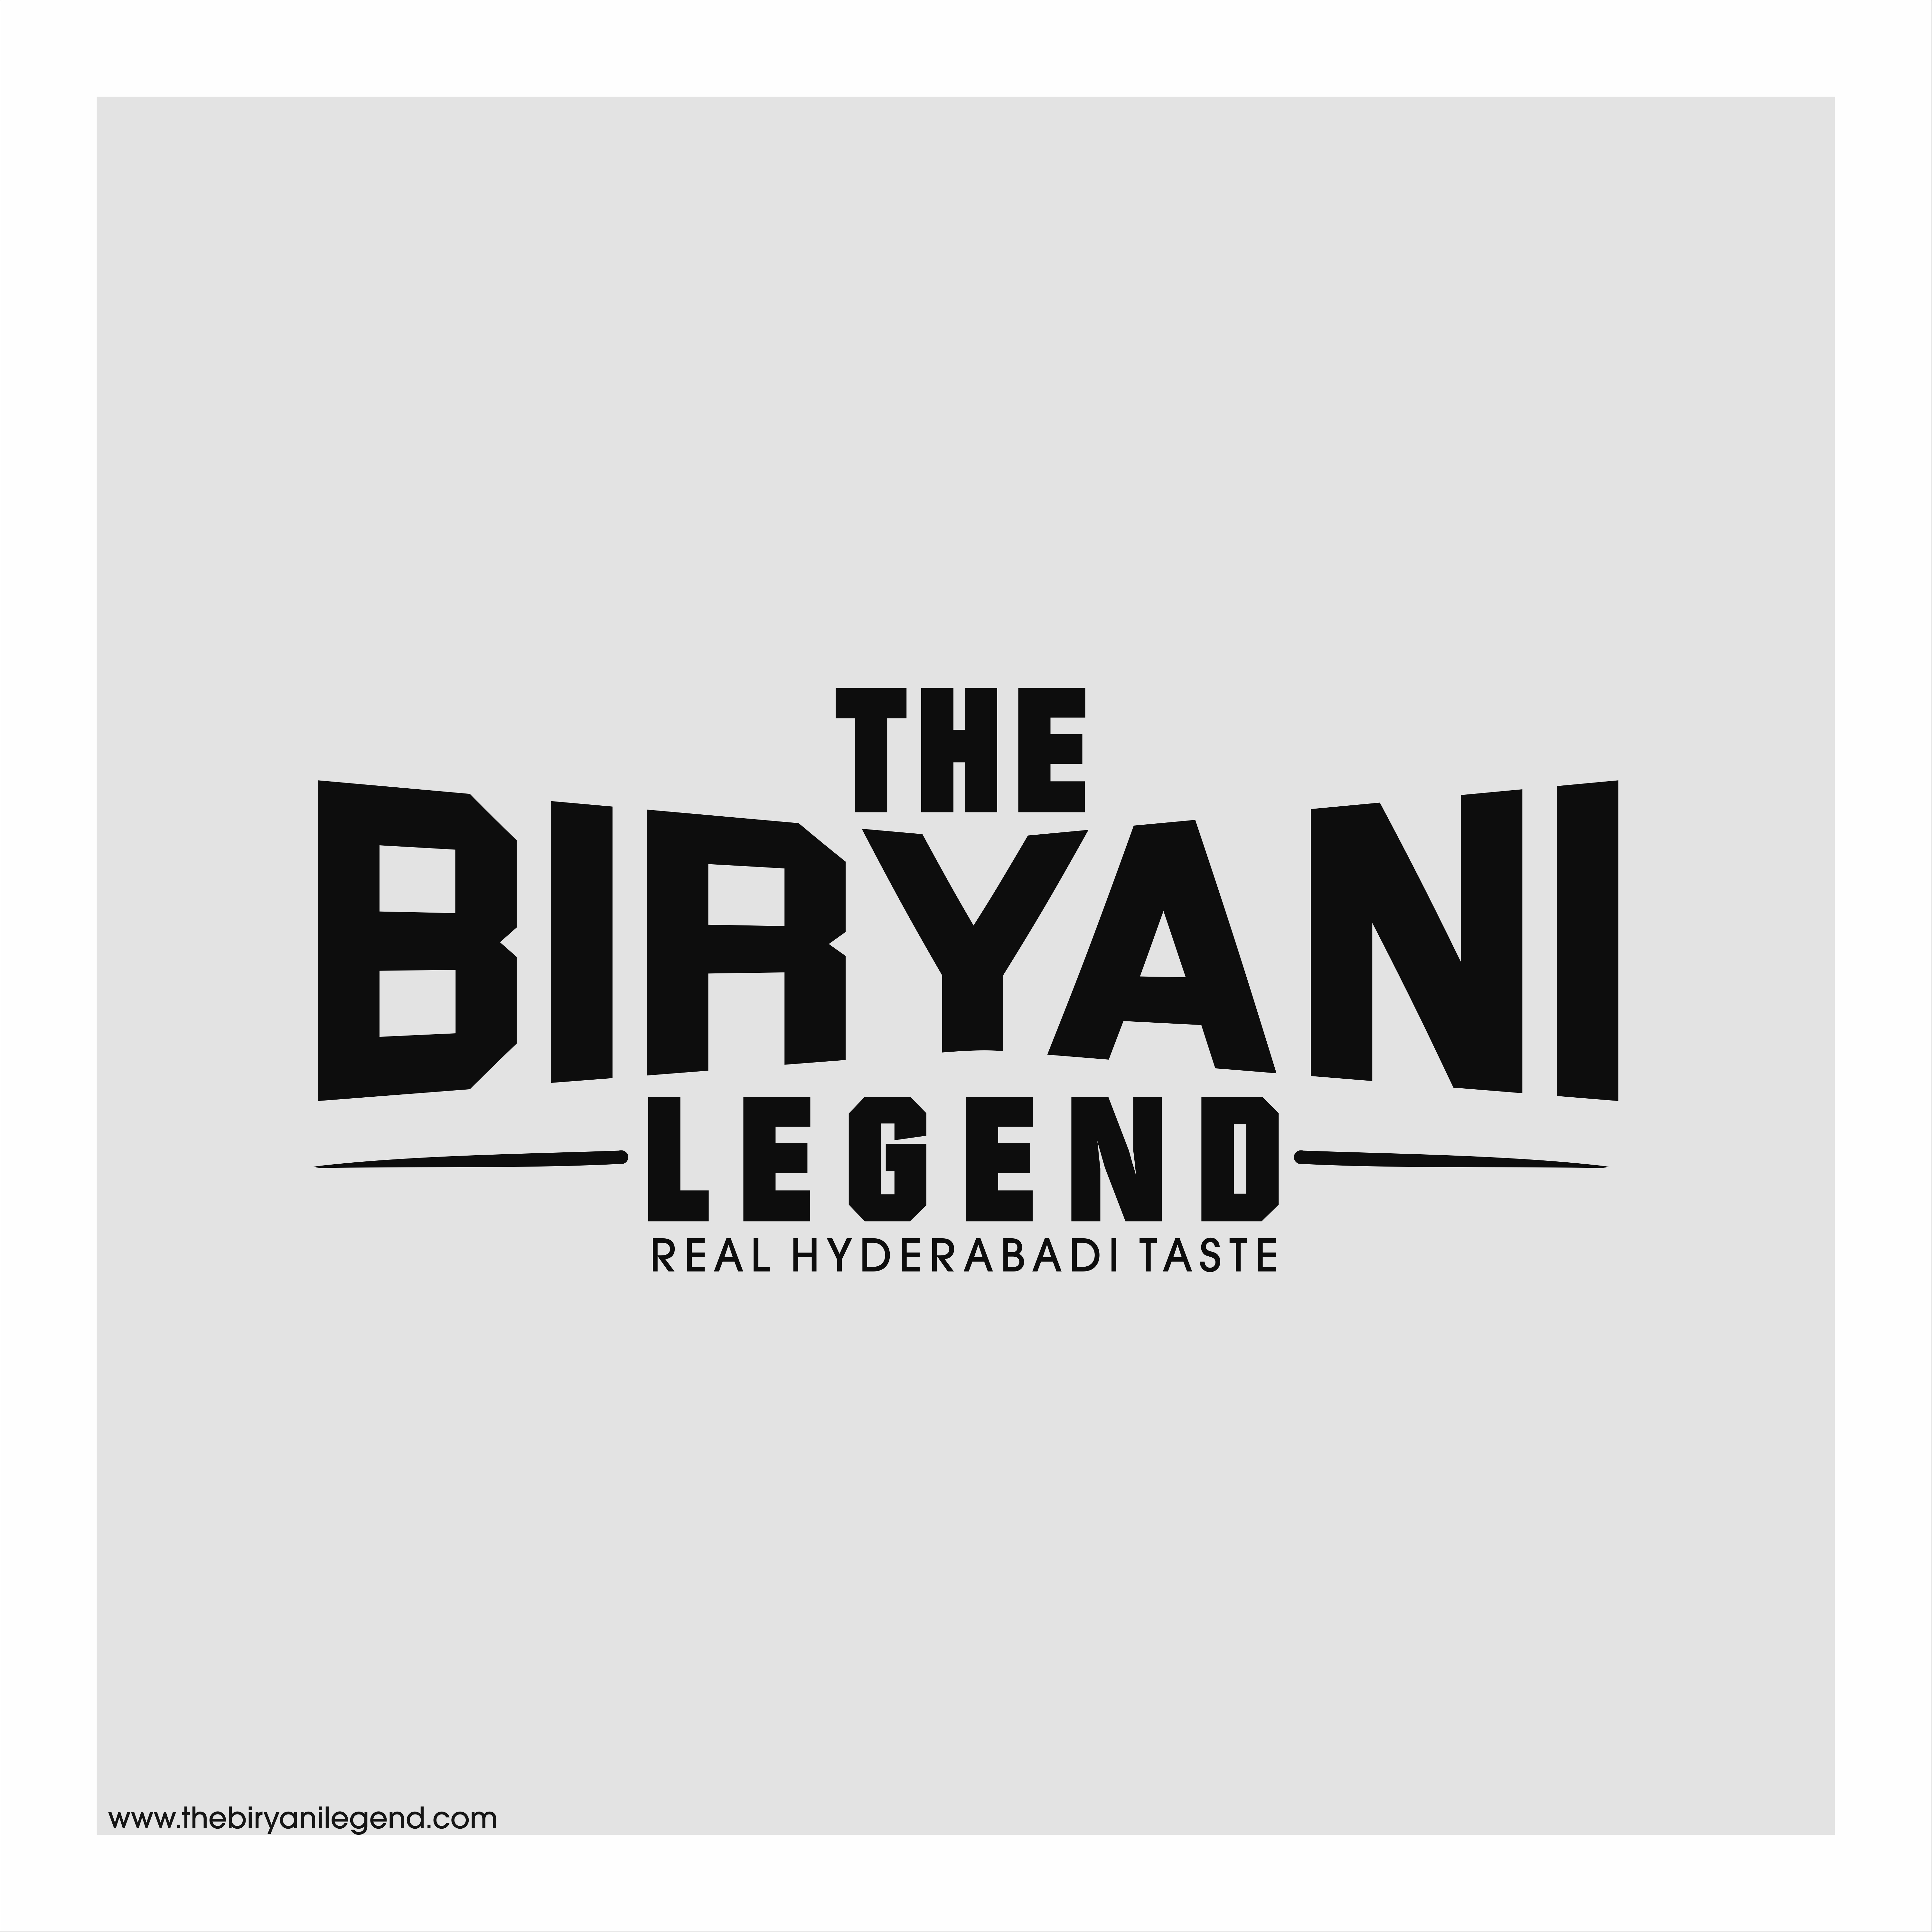 THE BIRYANI LEGEND